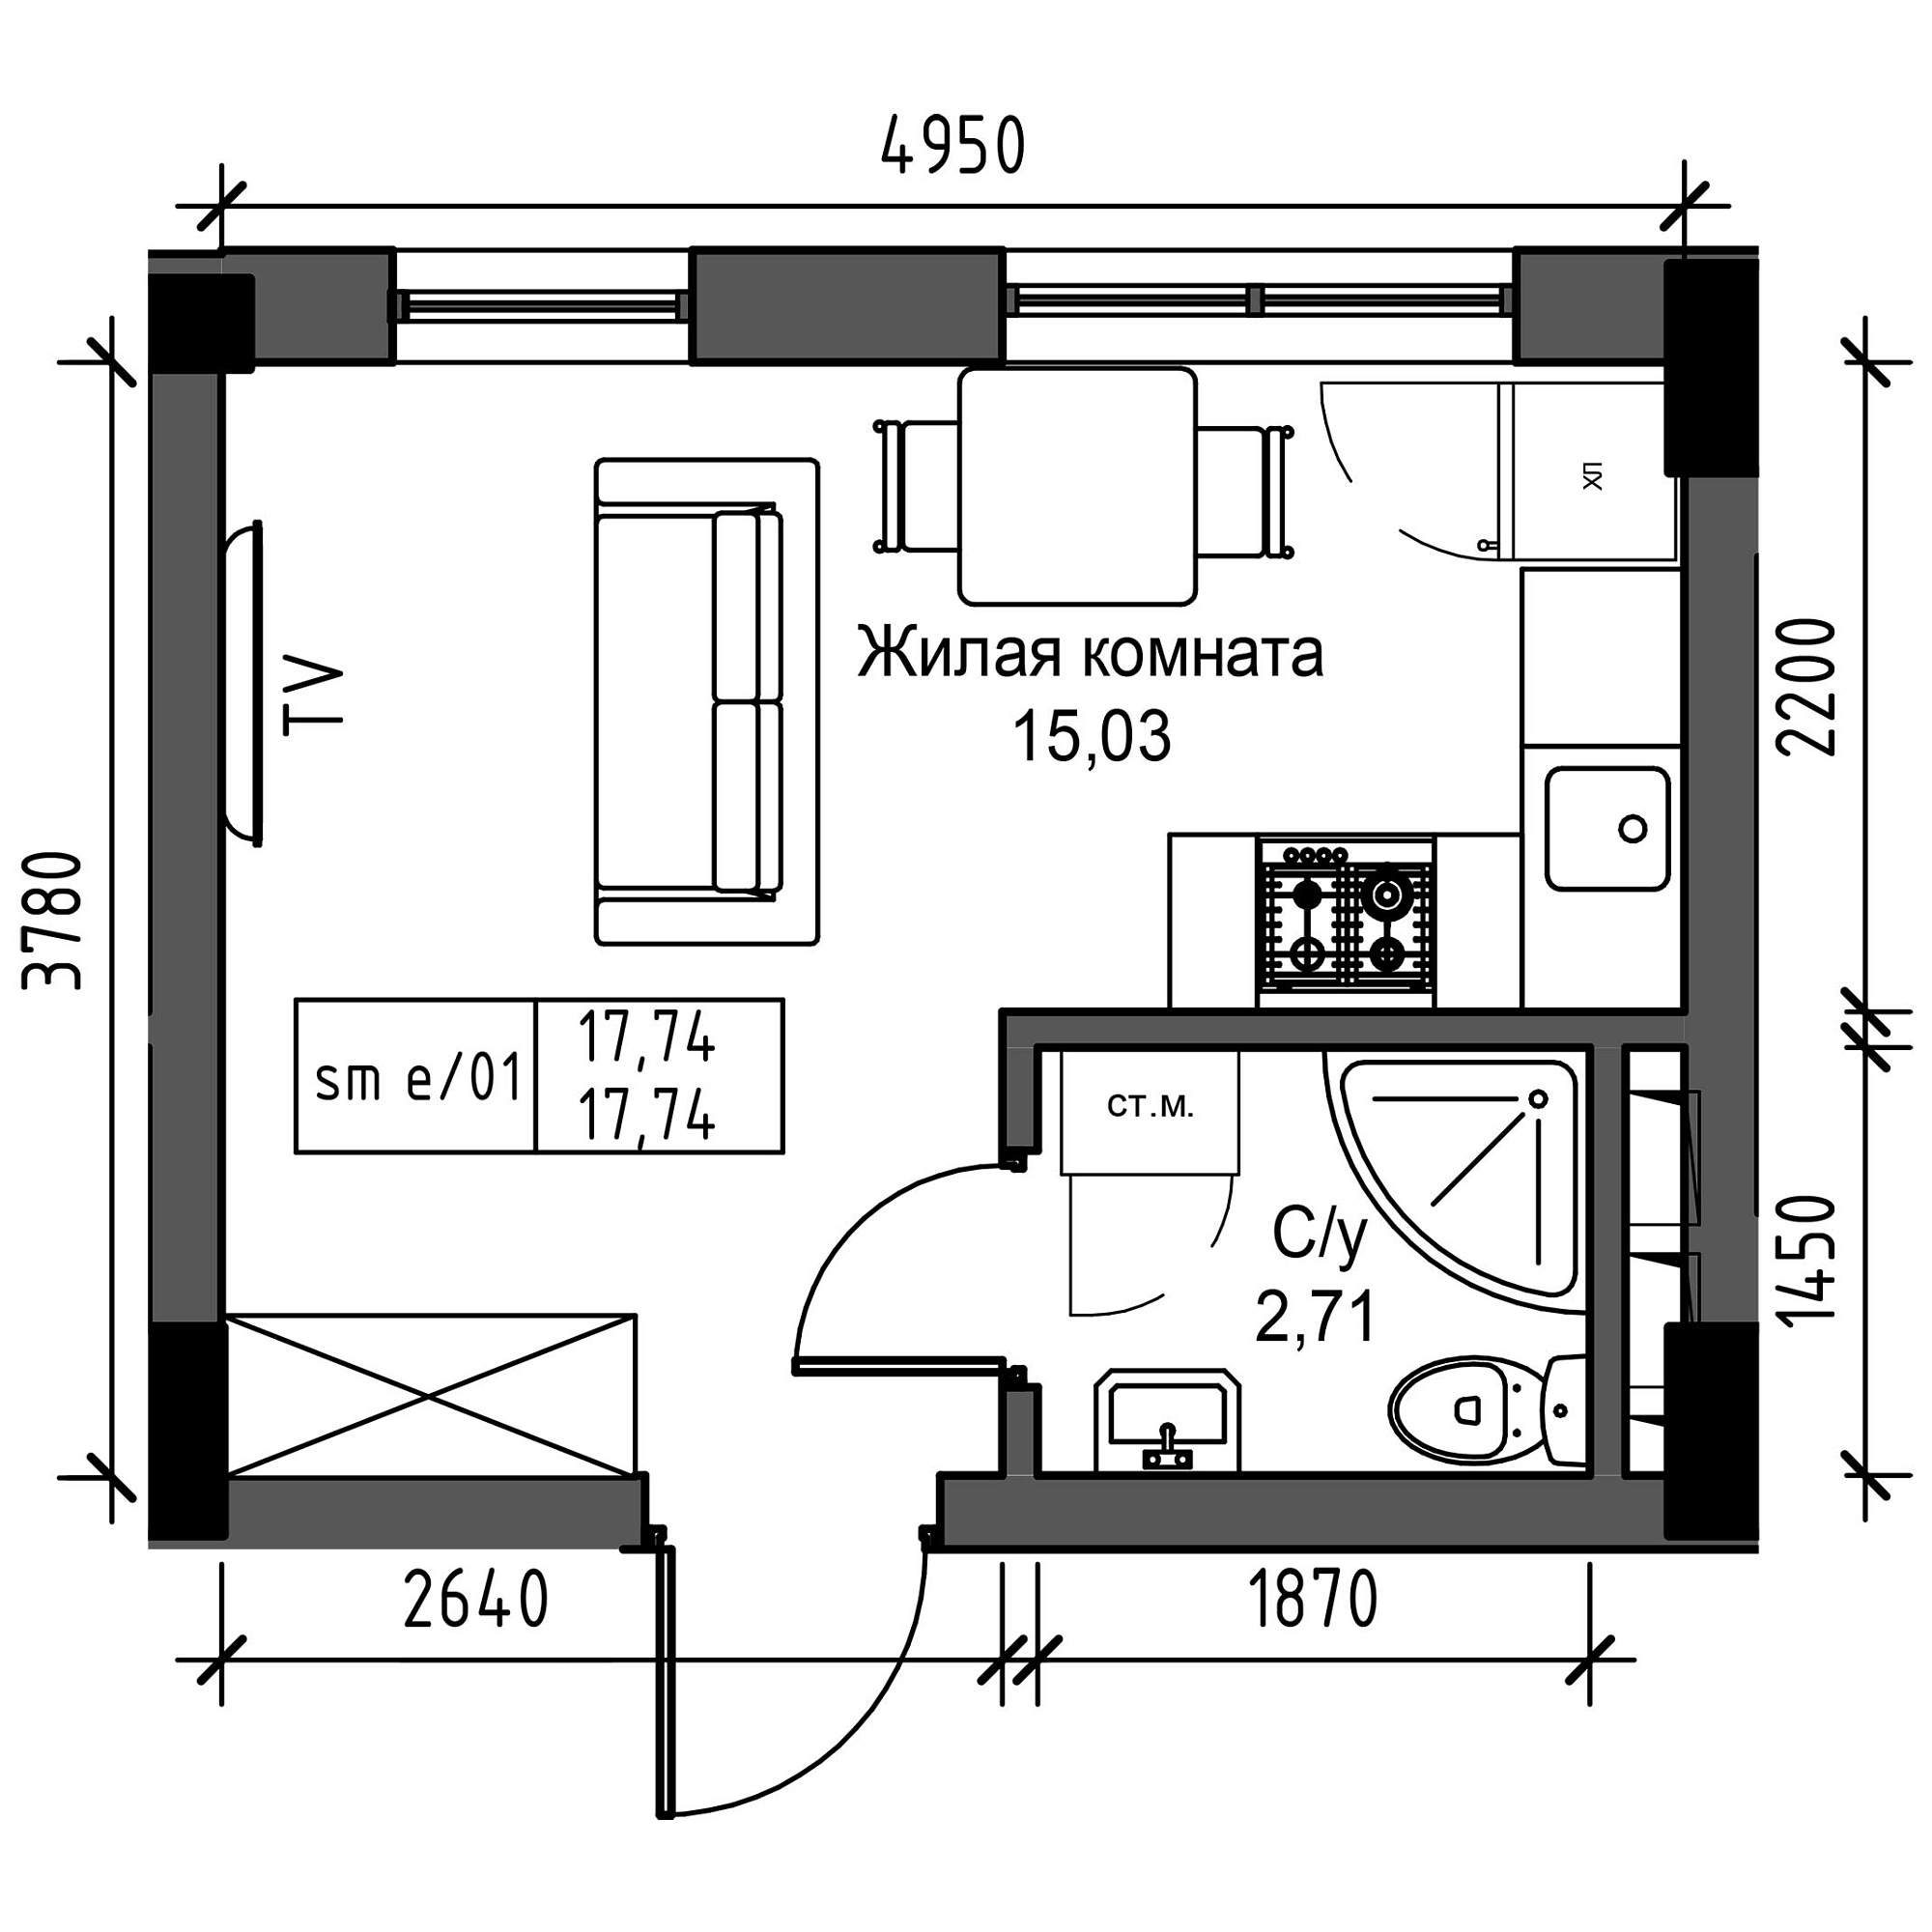 Planning Smart flats area 17.74m2, UM-003-05/0048.